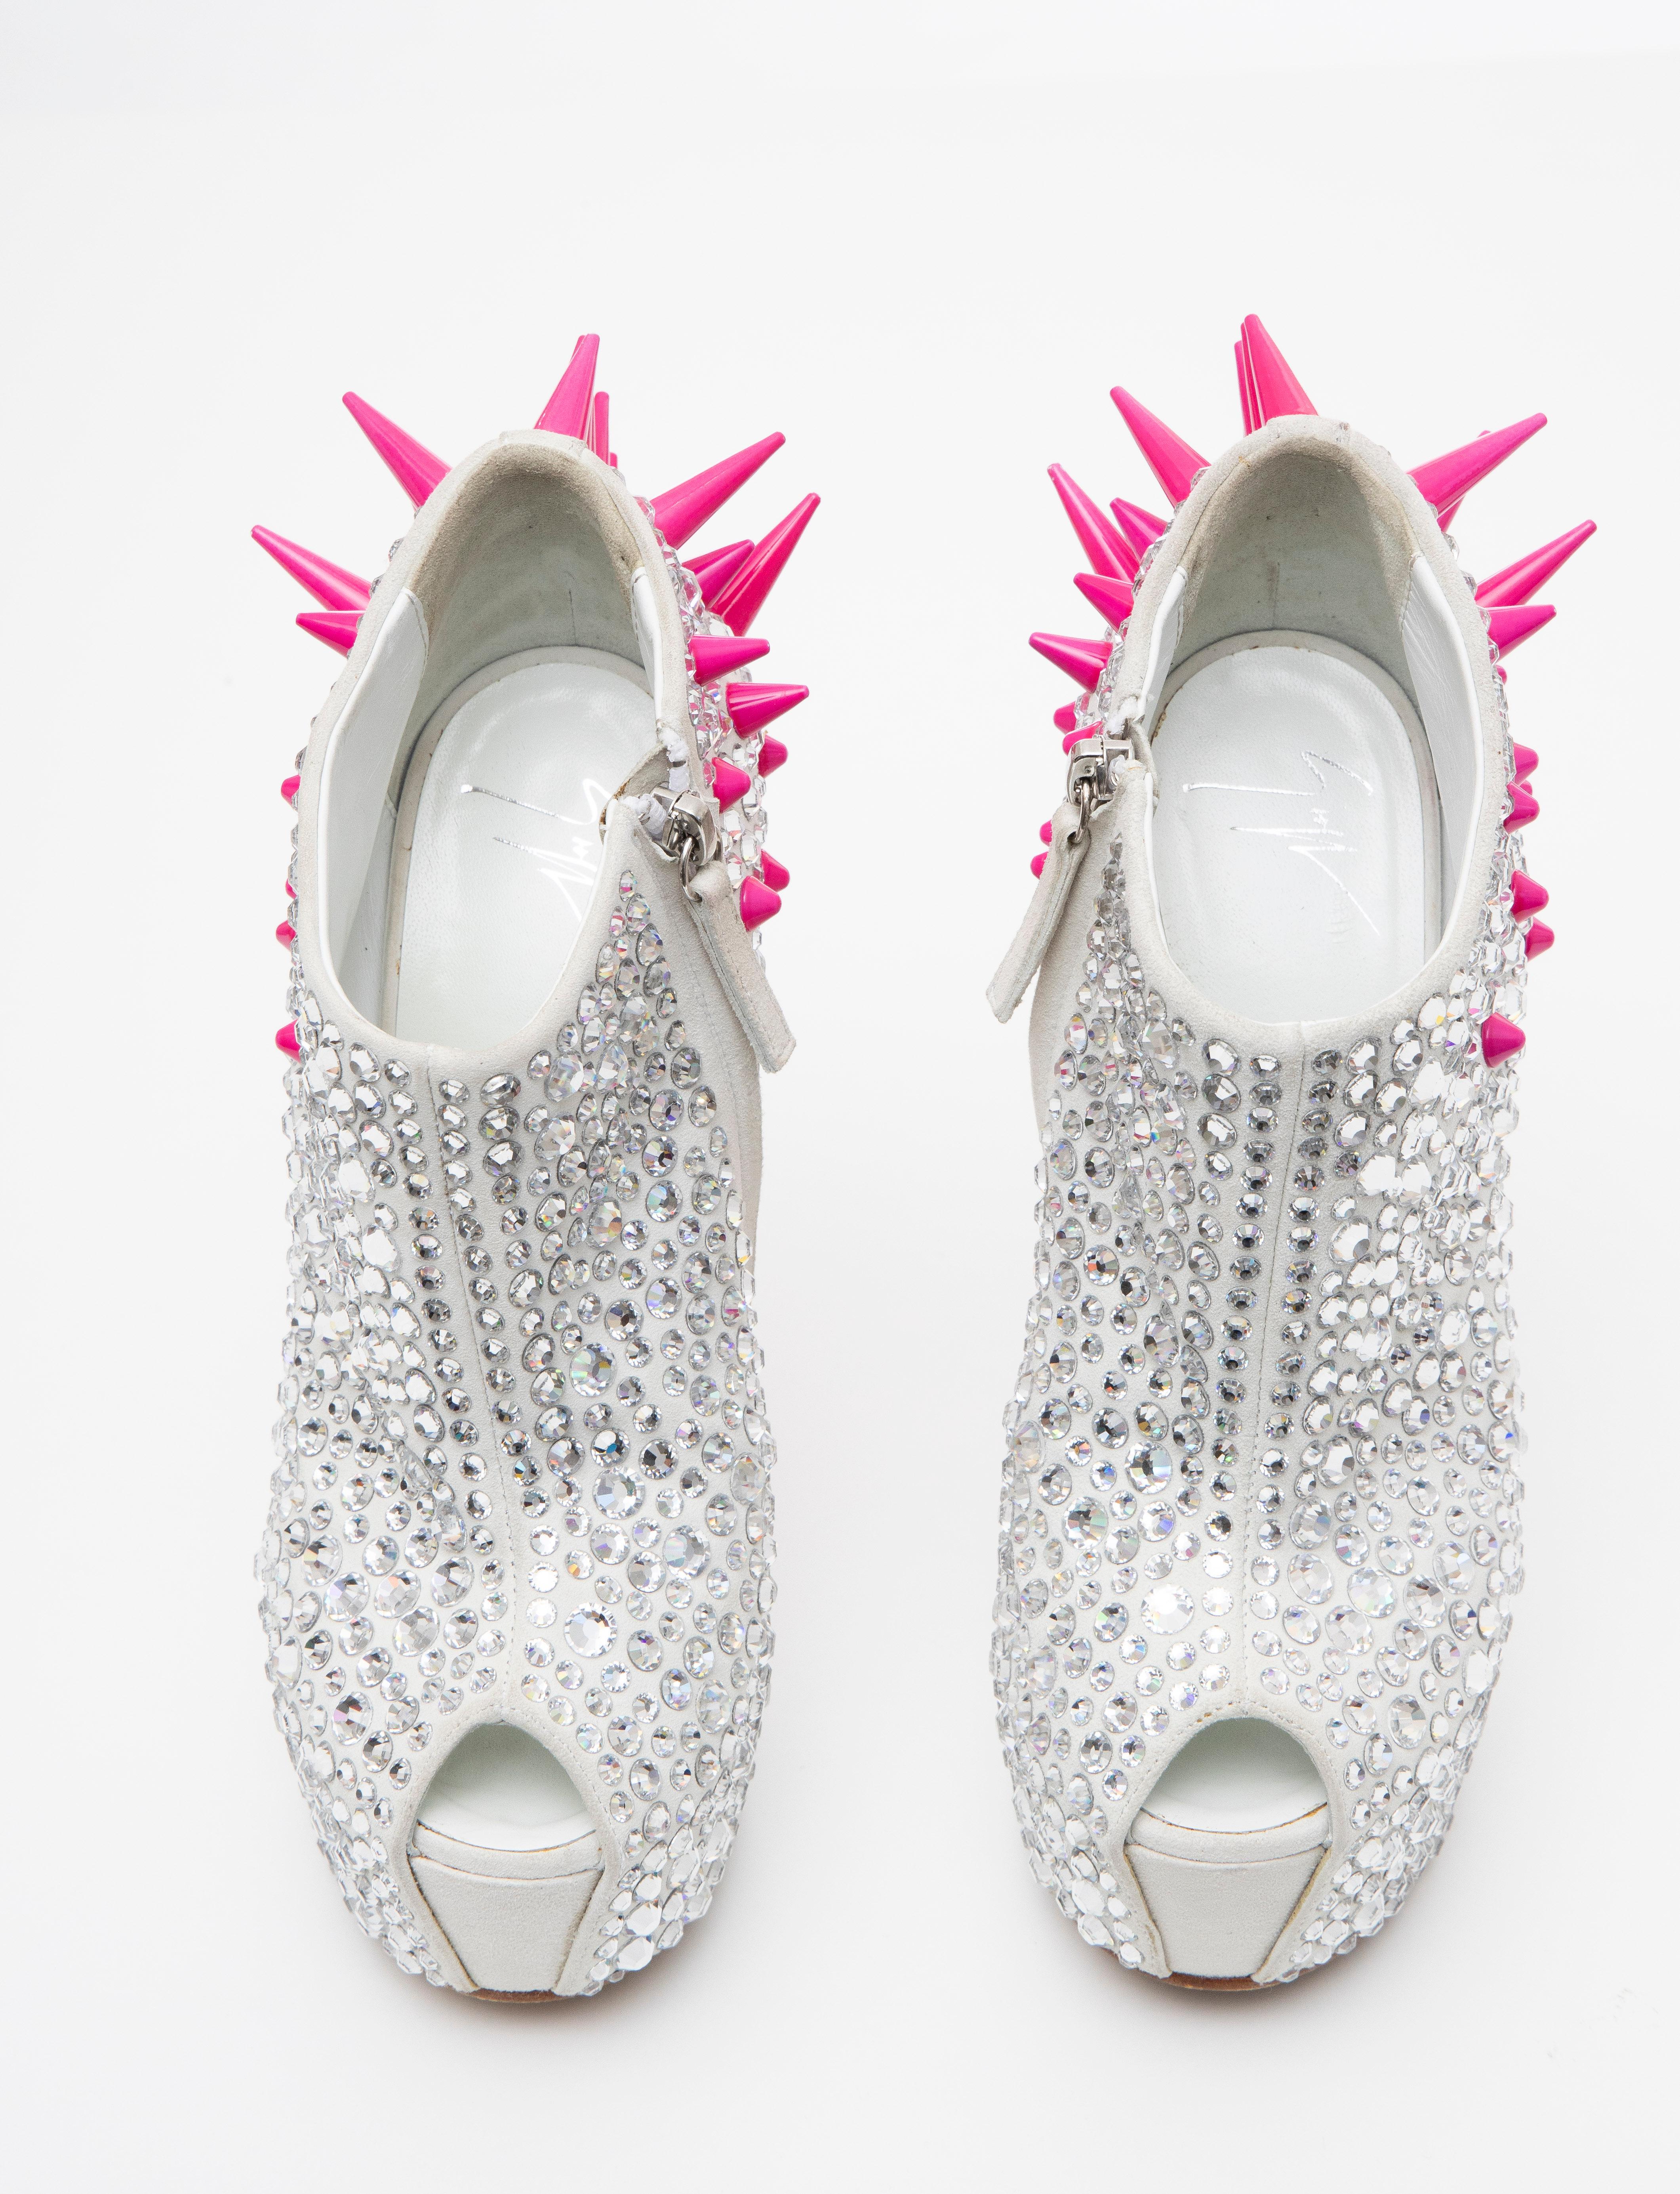 Guiseppe Zanotti Swarovski Crystal & Pink Spiked-Embellished Wedges Fall 2012 For Sale 10